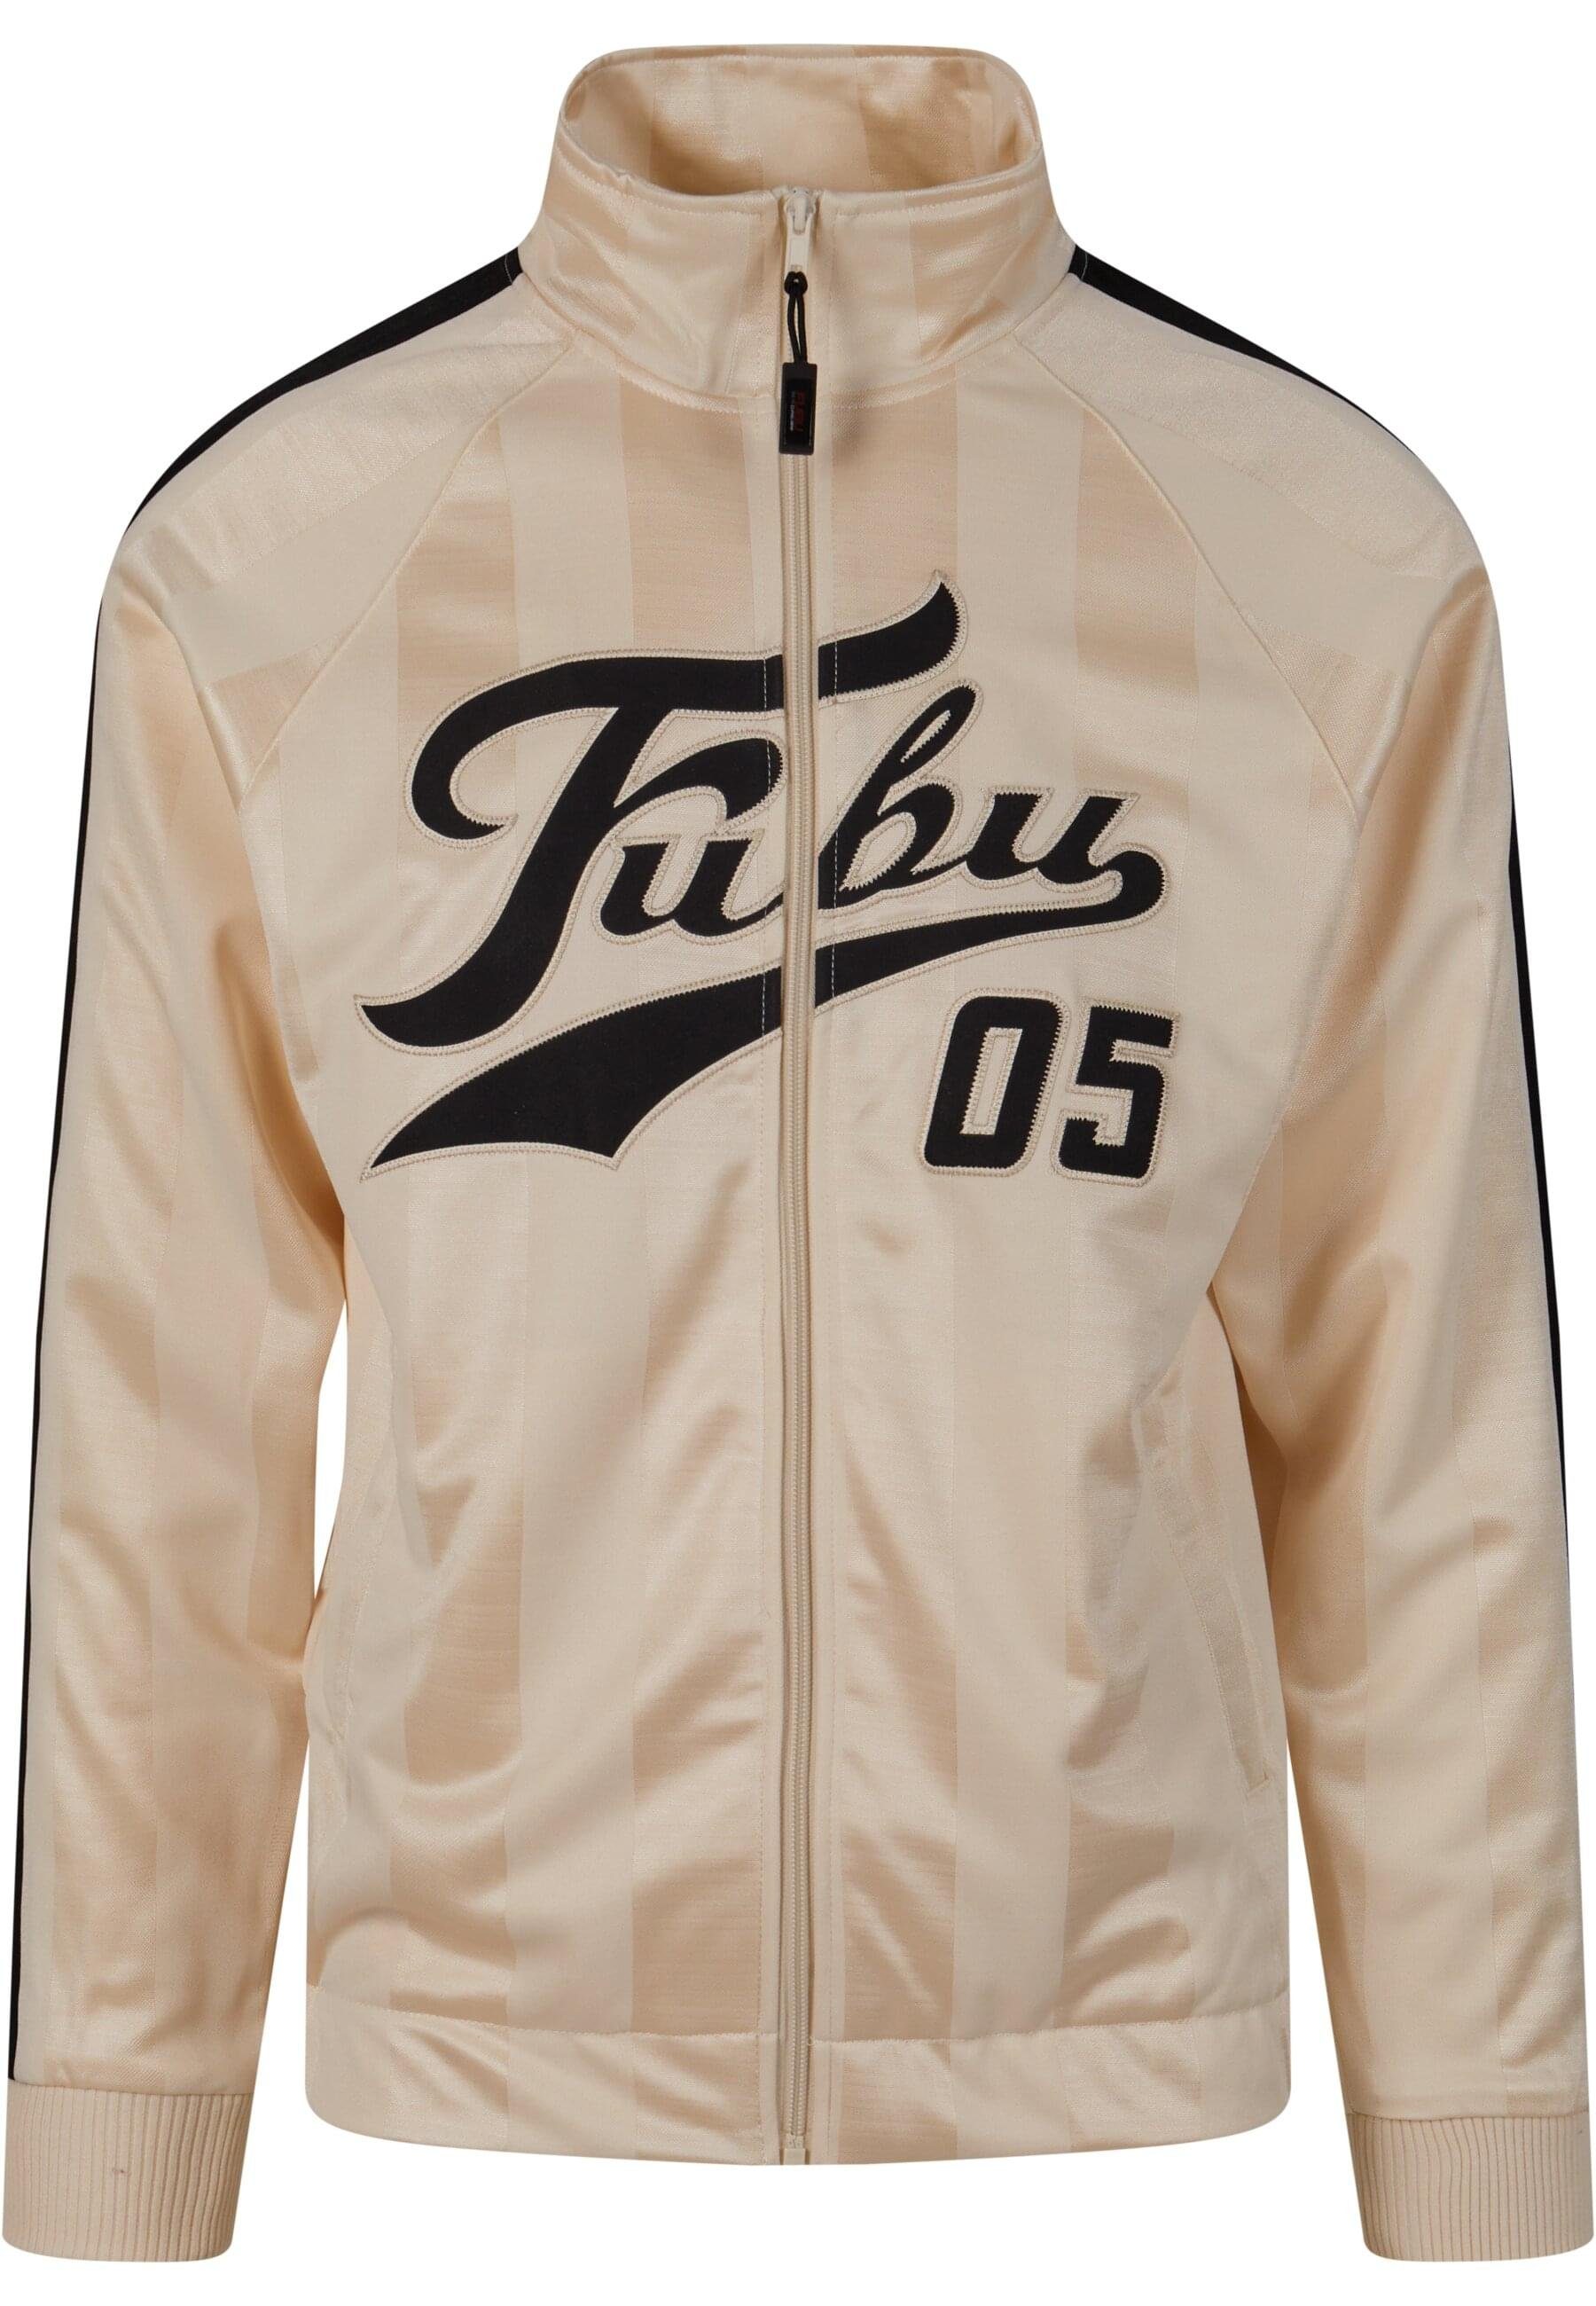 (1-St) FUBU FM223-017-1 Fubu Herren Varsity Trainingsjacke Track Jacket Striped